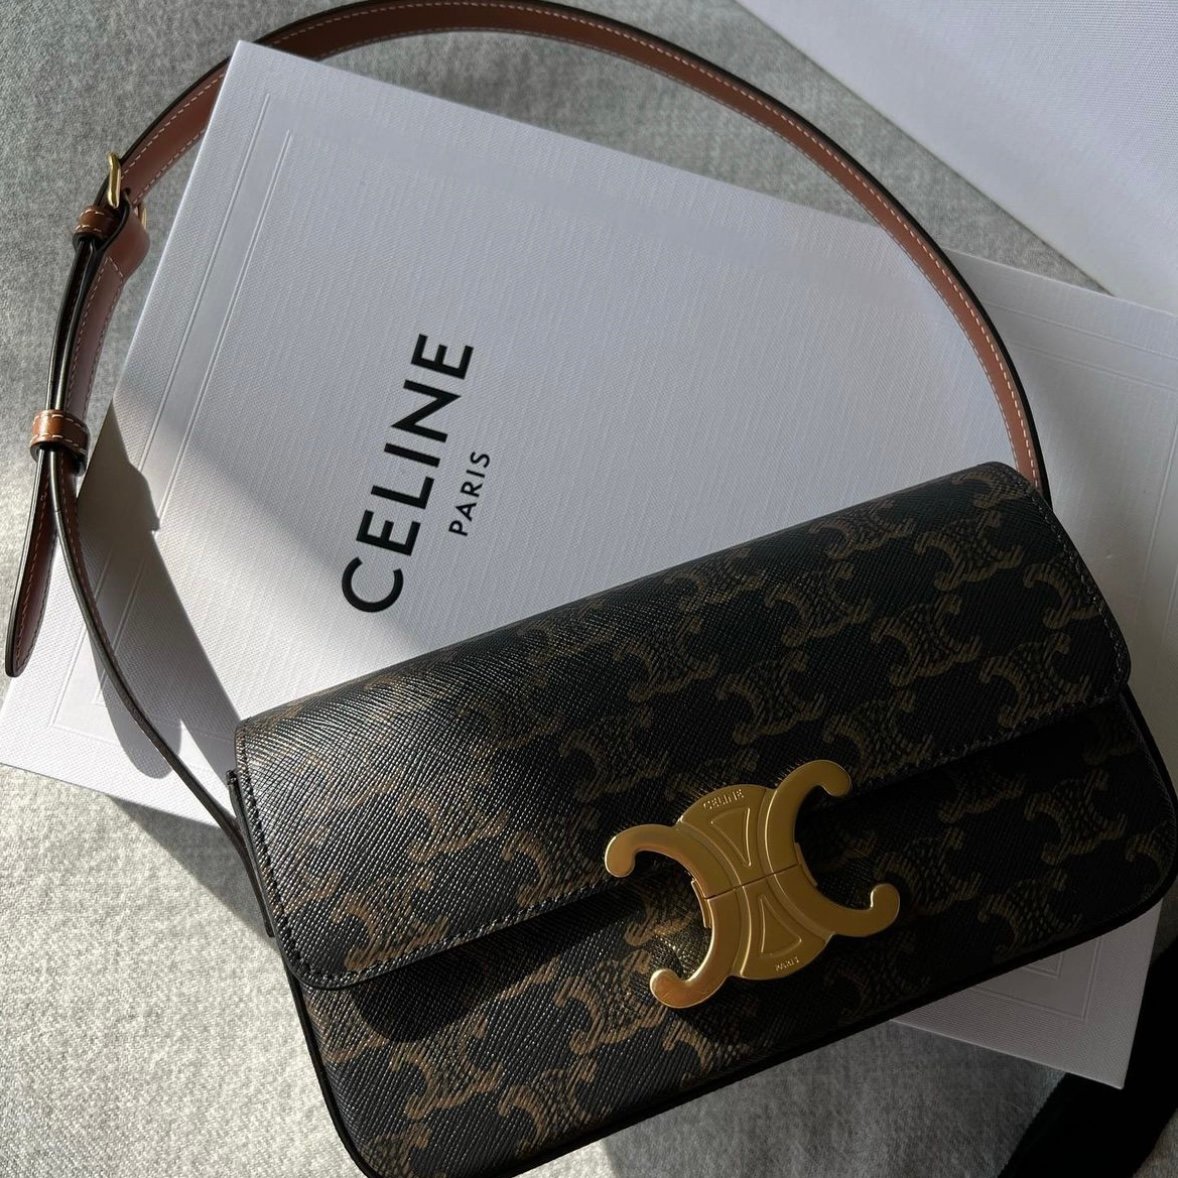 Buy Celine Backpack Online In India -  India